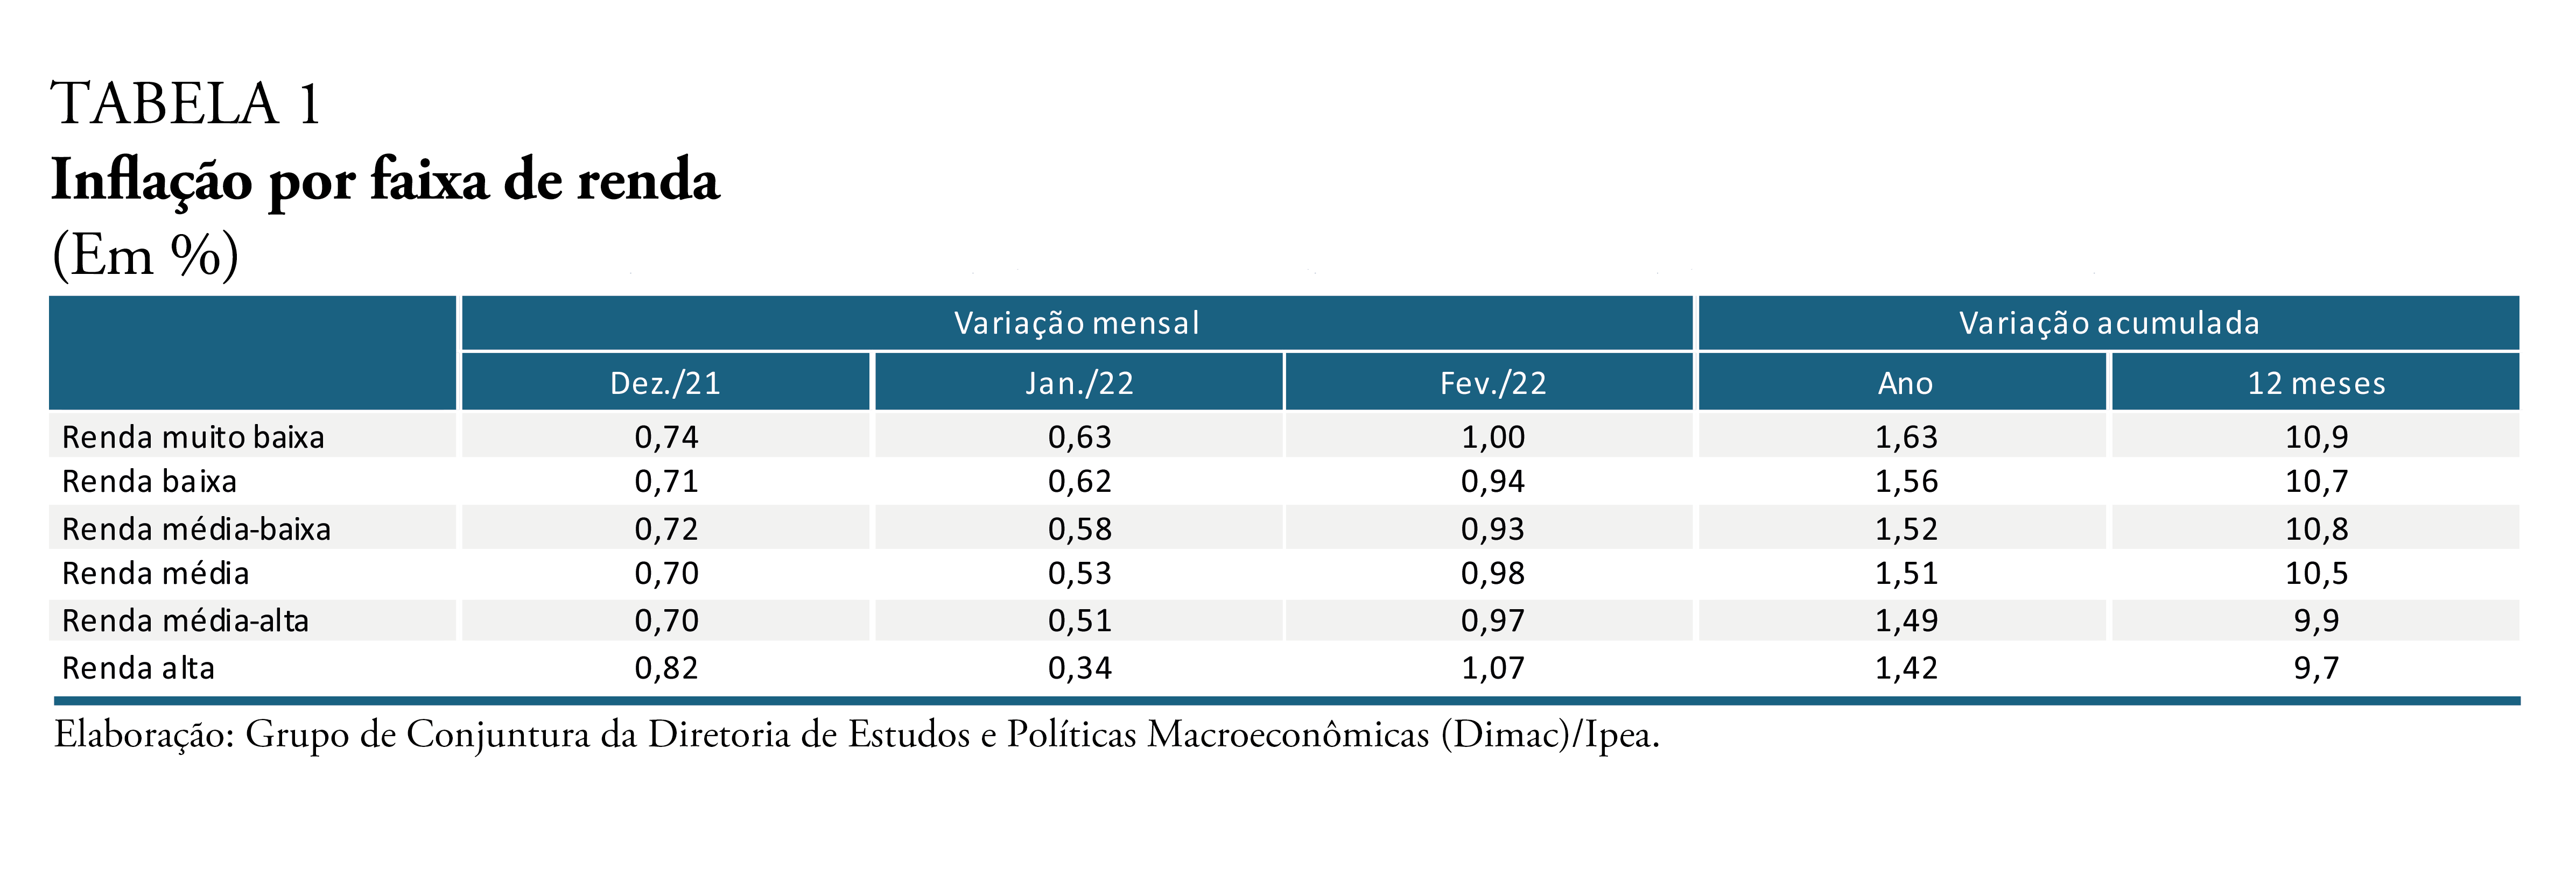 IPEA Tabela Inflacao